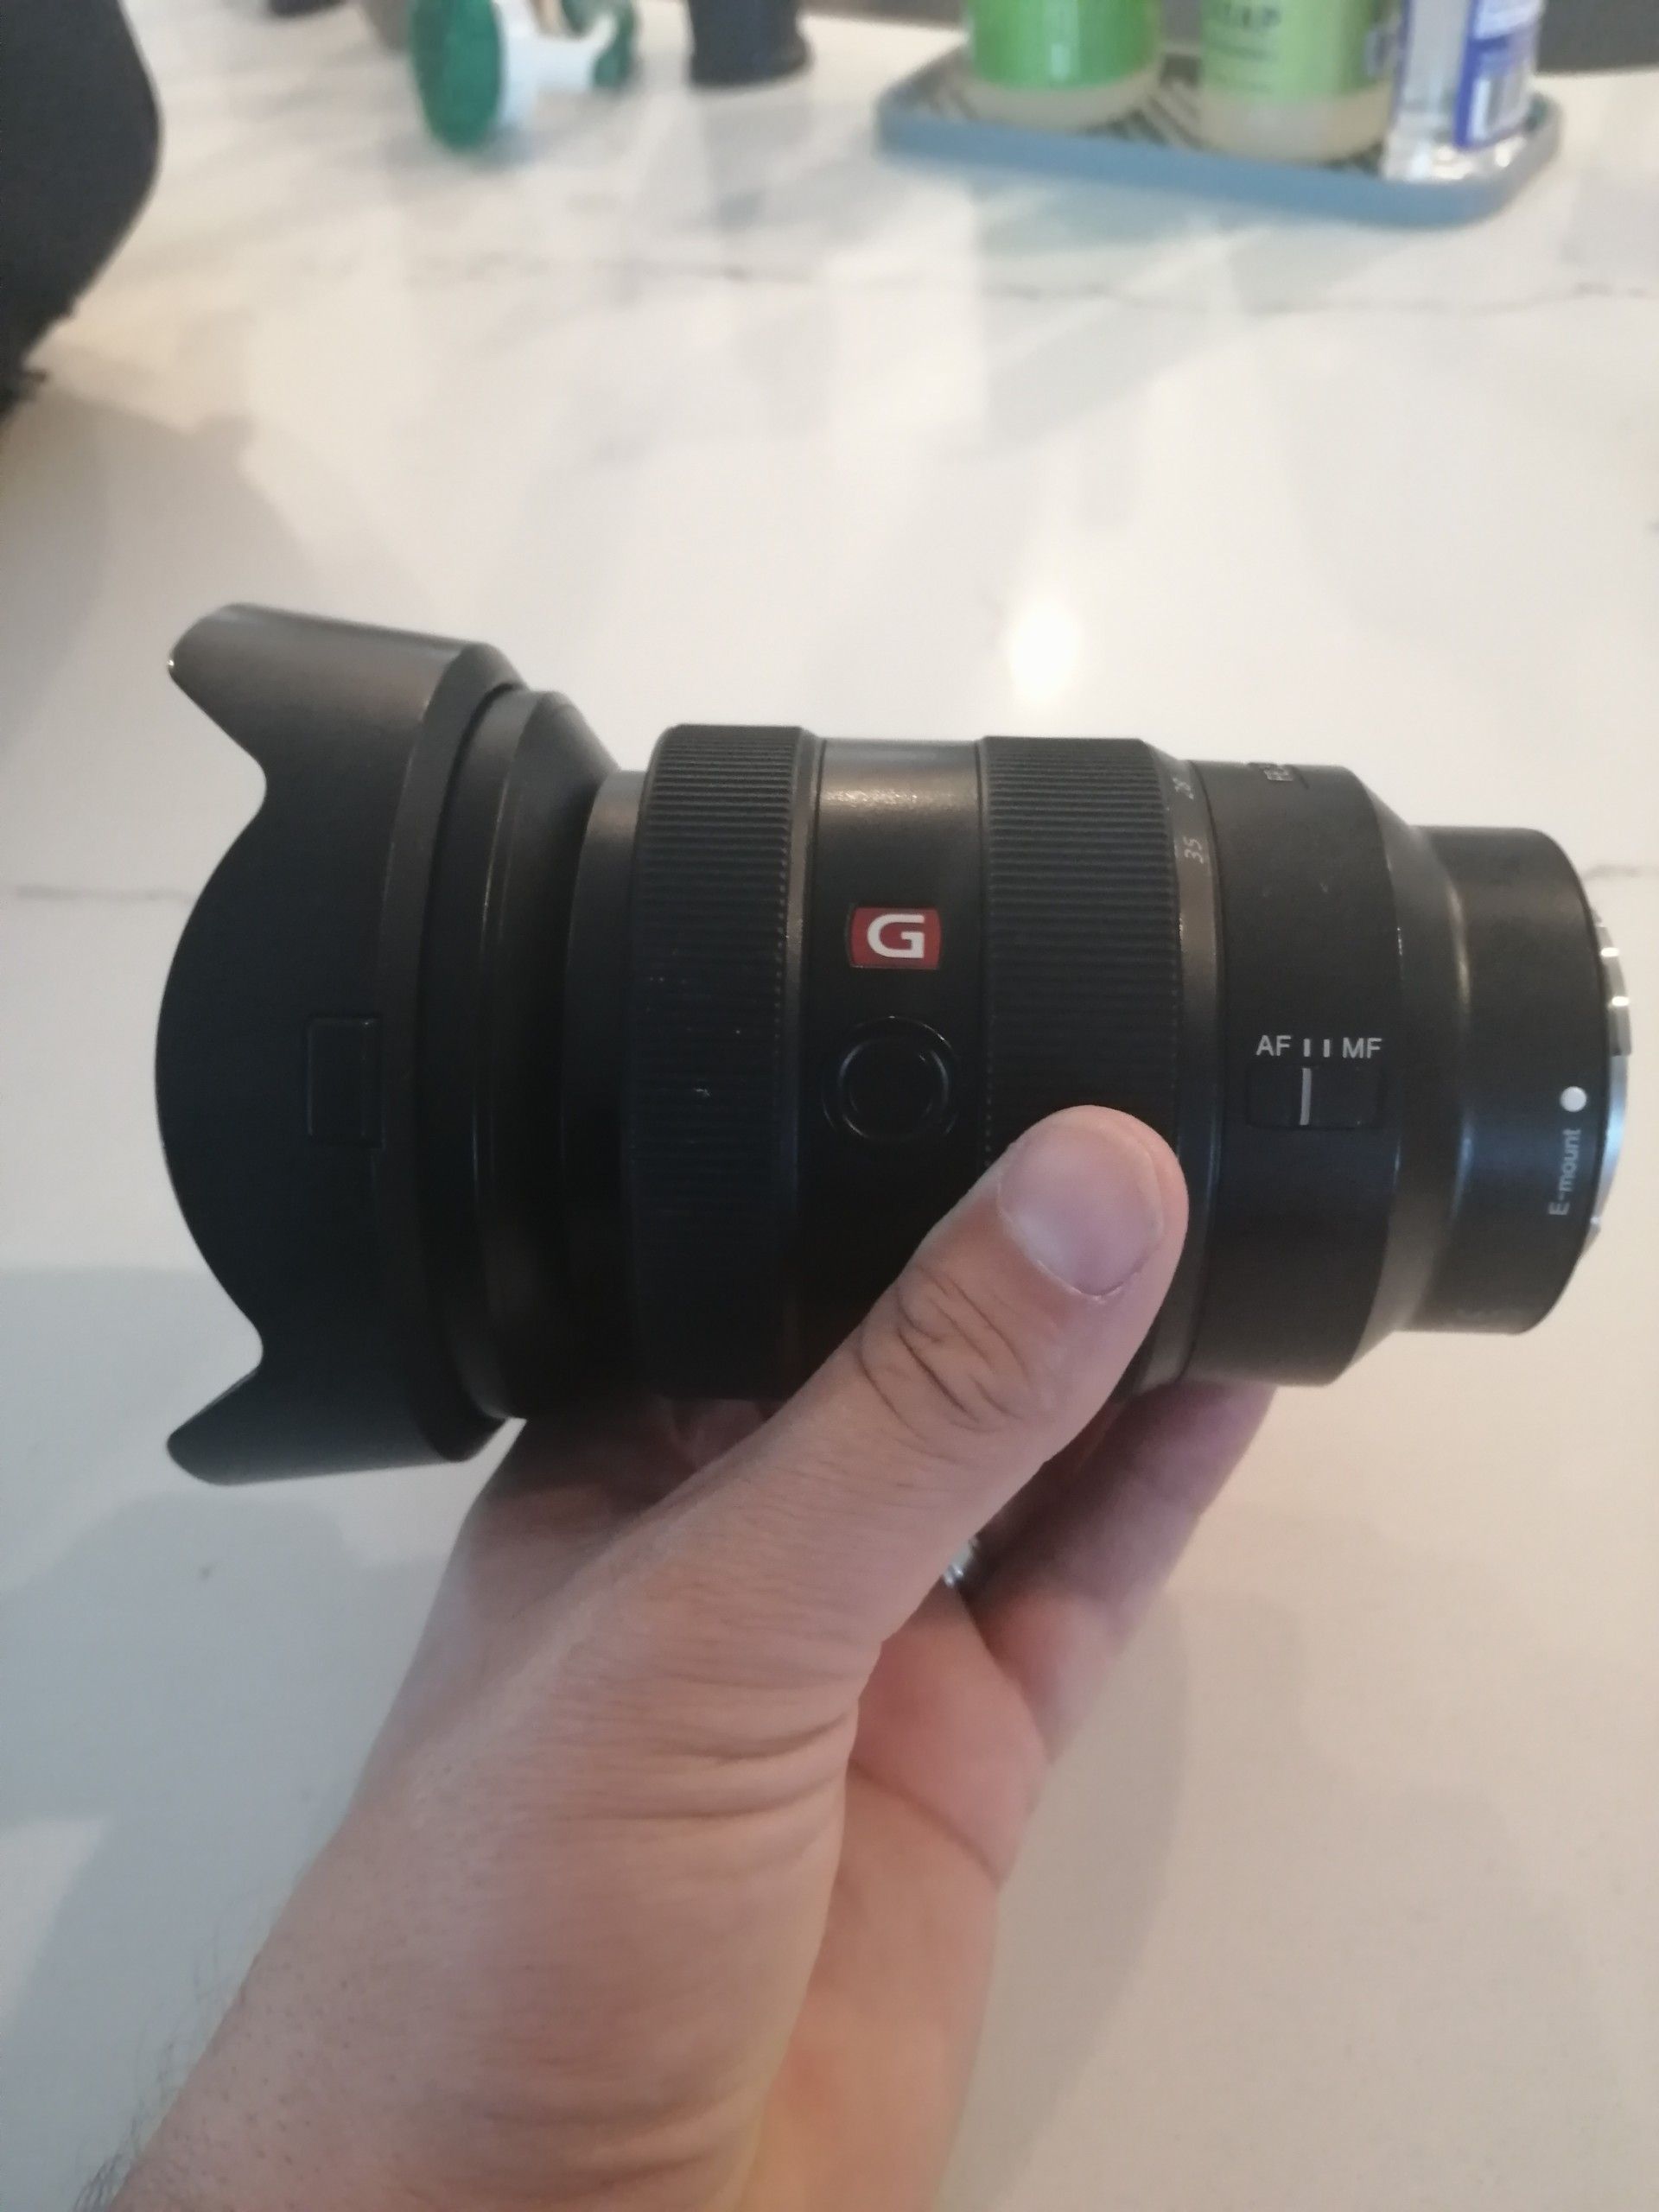 Sony 16-35mm F2.8 GM Lens